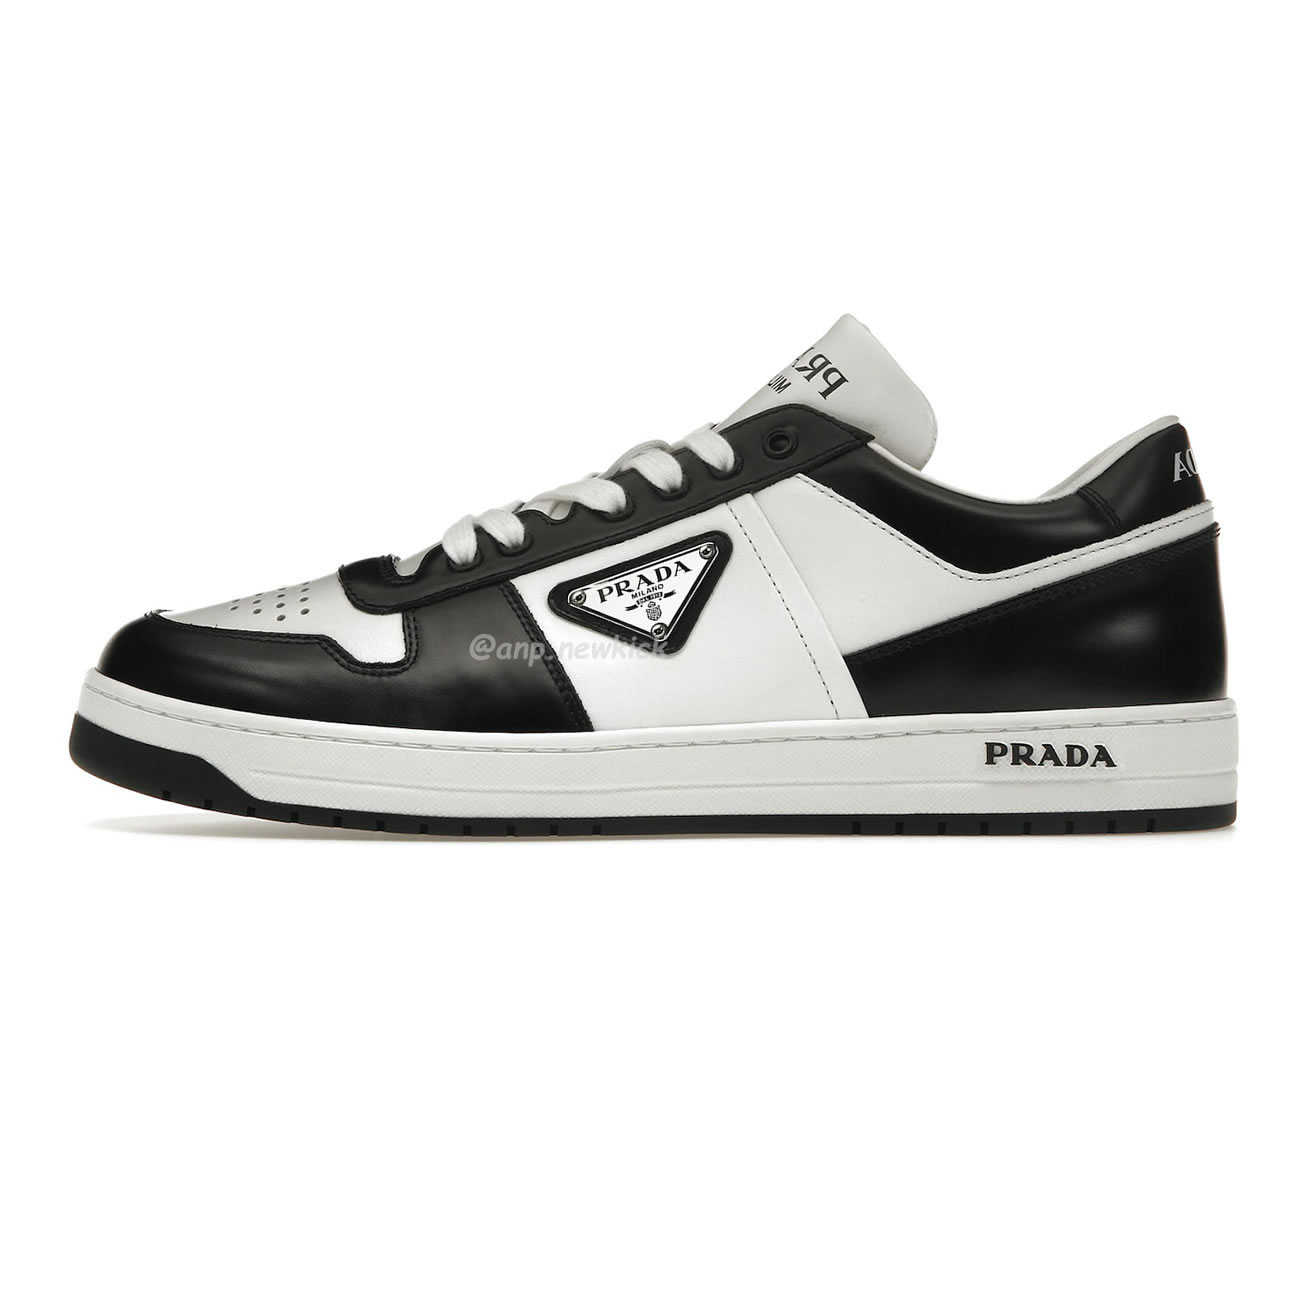 Prada Downtown Low Top Sneakers Leather White Black 2EE364-3LKG-F0964